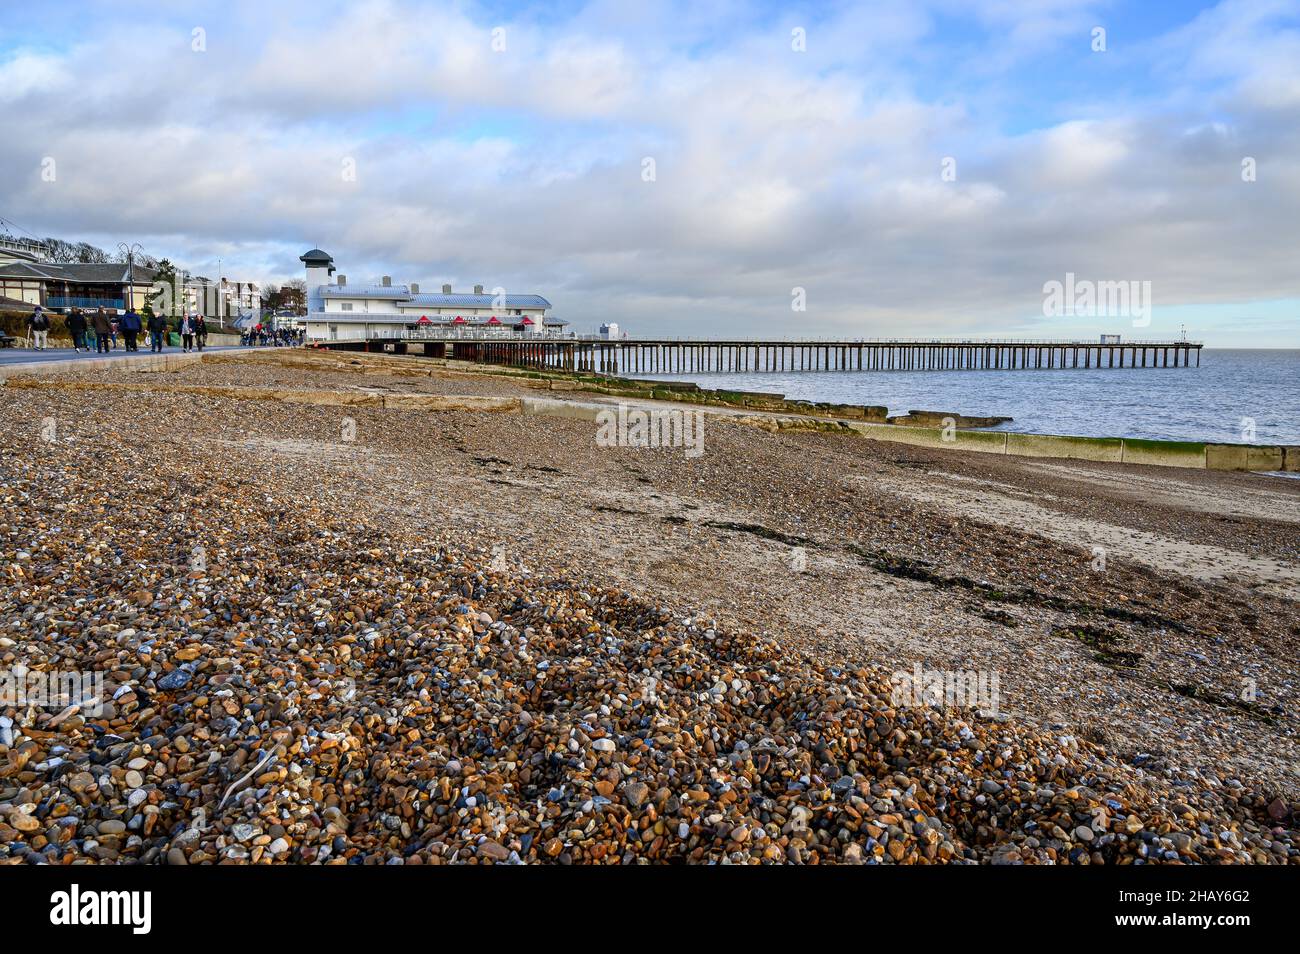 Felixstowe, Suffolk, UK: view of Felixstowe pier from the pebble beach. People walk along the promenade. Stock Photo